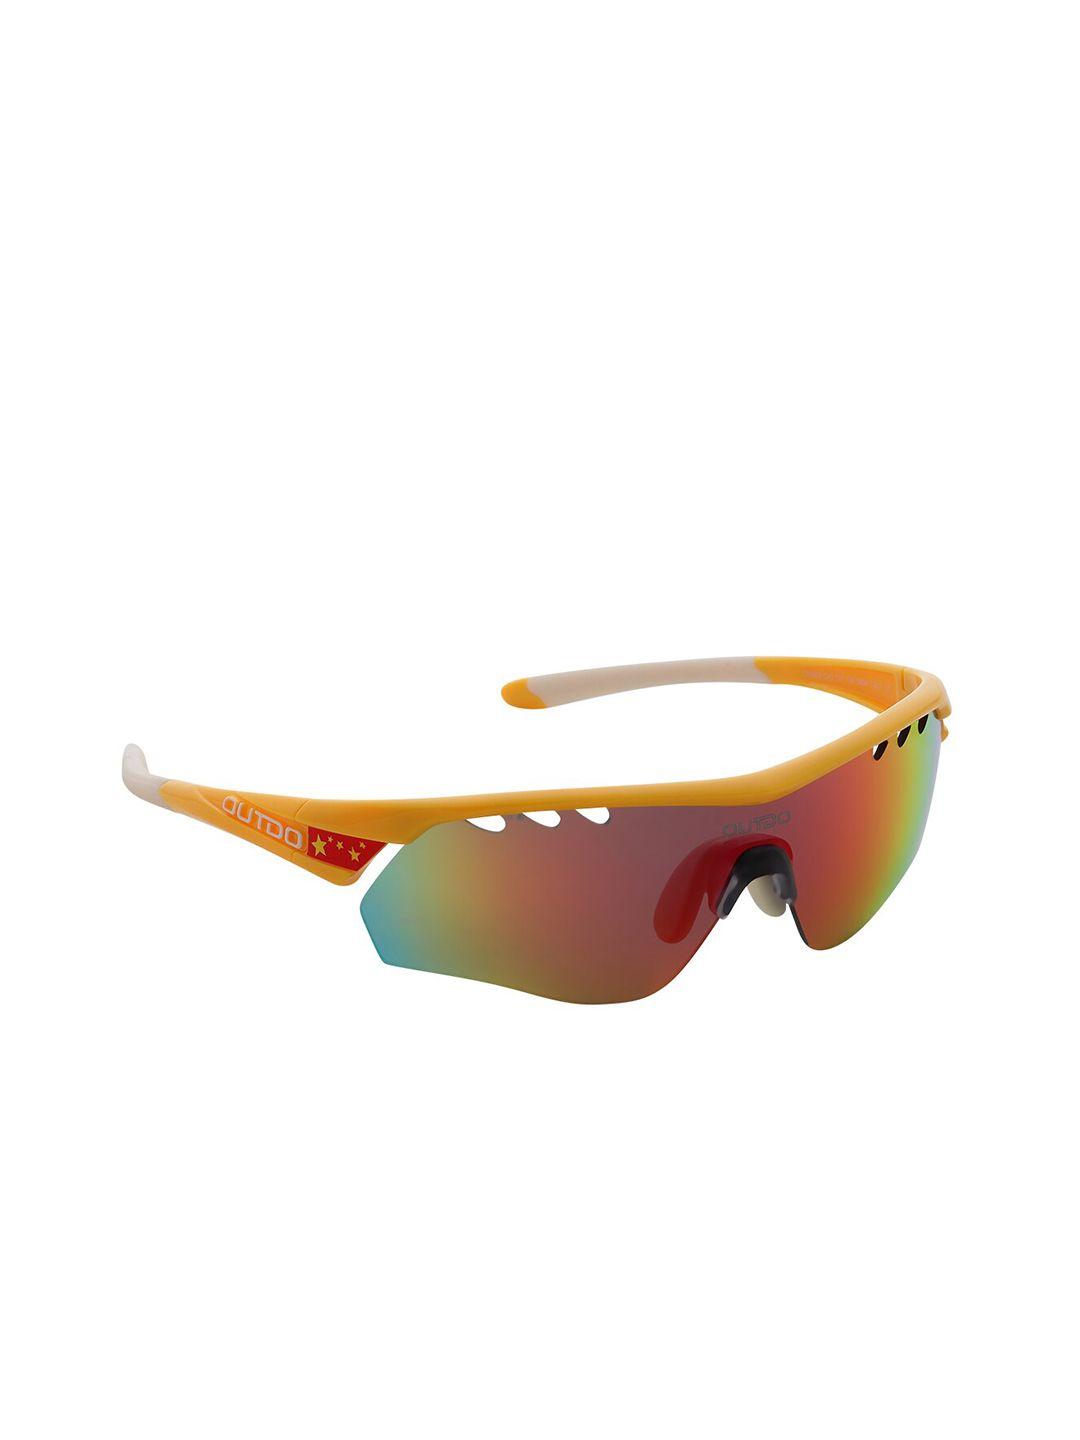 charles london men orange lens & yellow sports sunglasses with uv protected lens